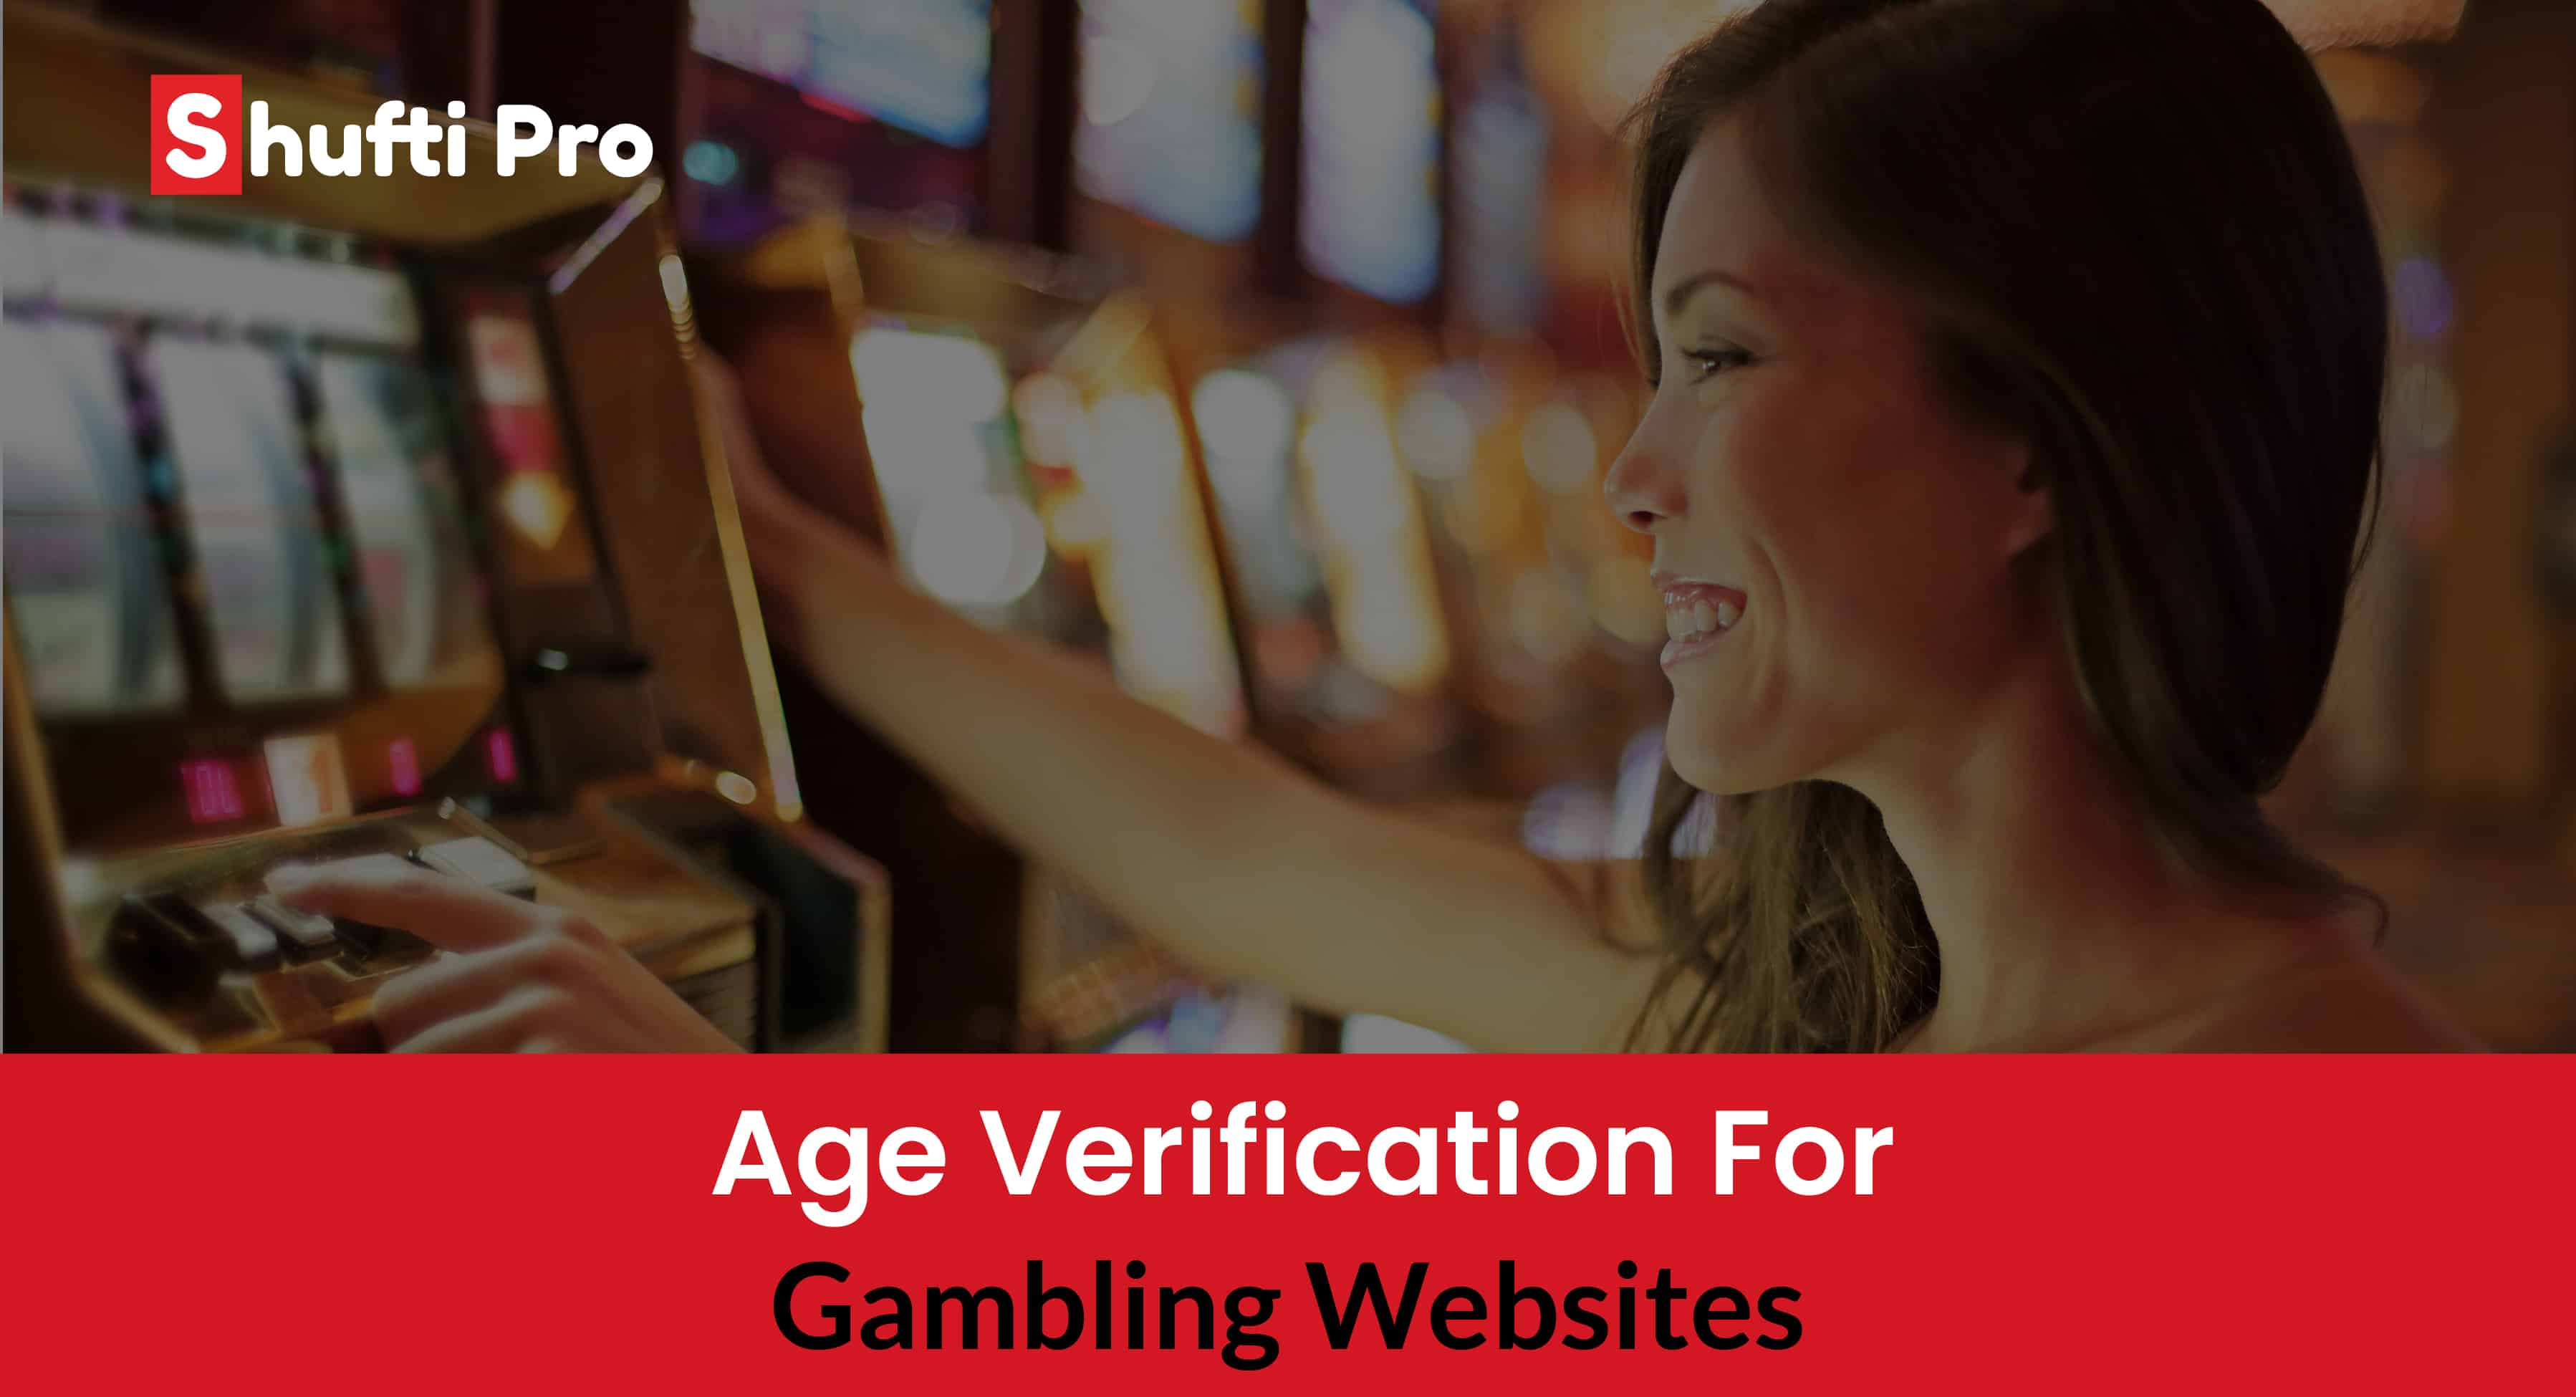 Age verification for gambling websites